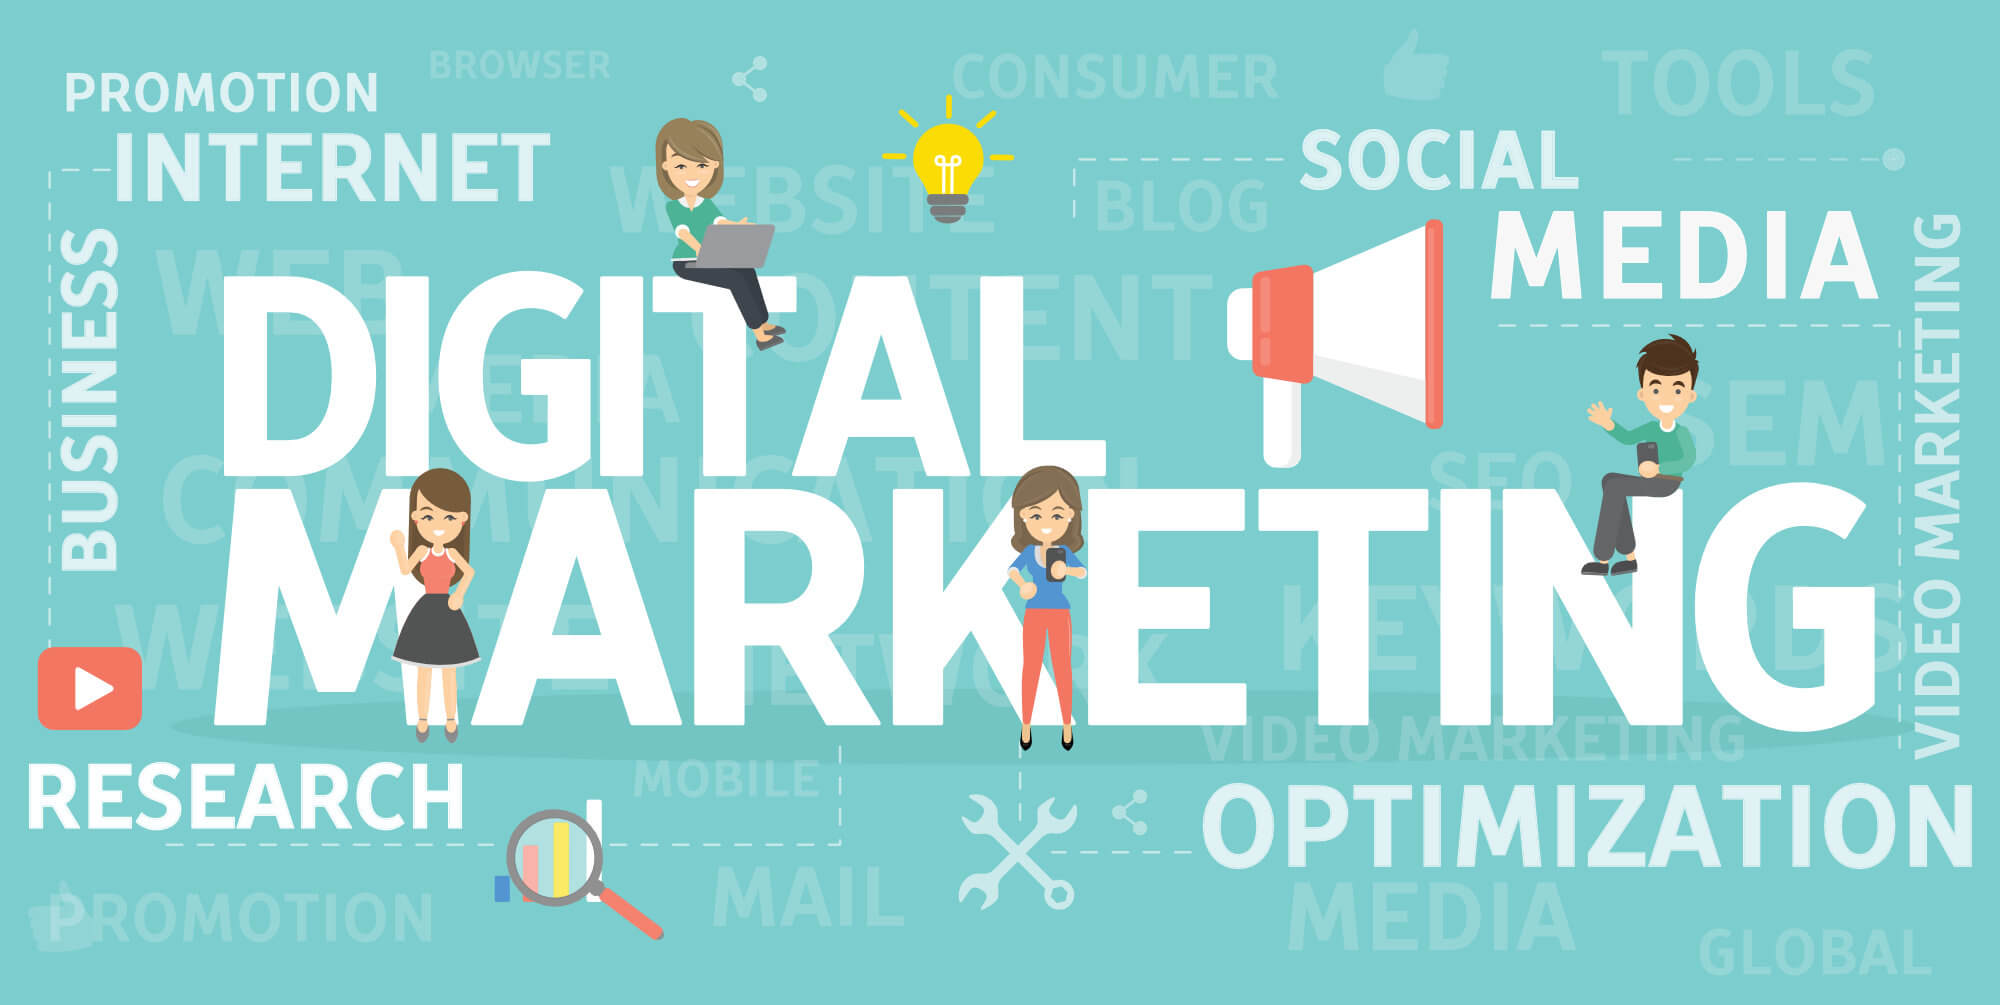 B2B Digital Marketing Agency Pittsburgh, PA | Marketing Pathways